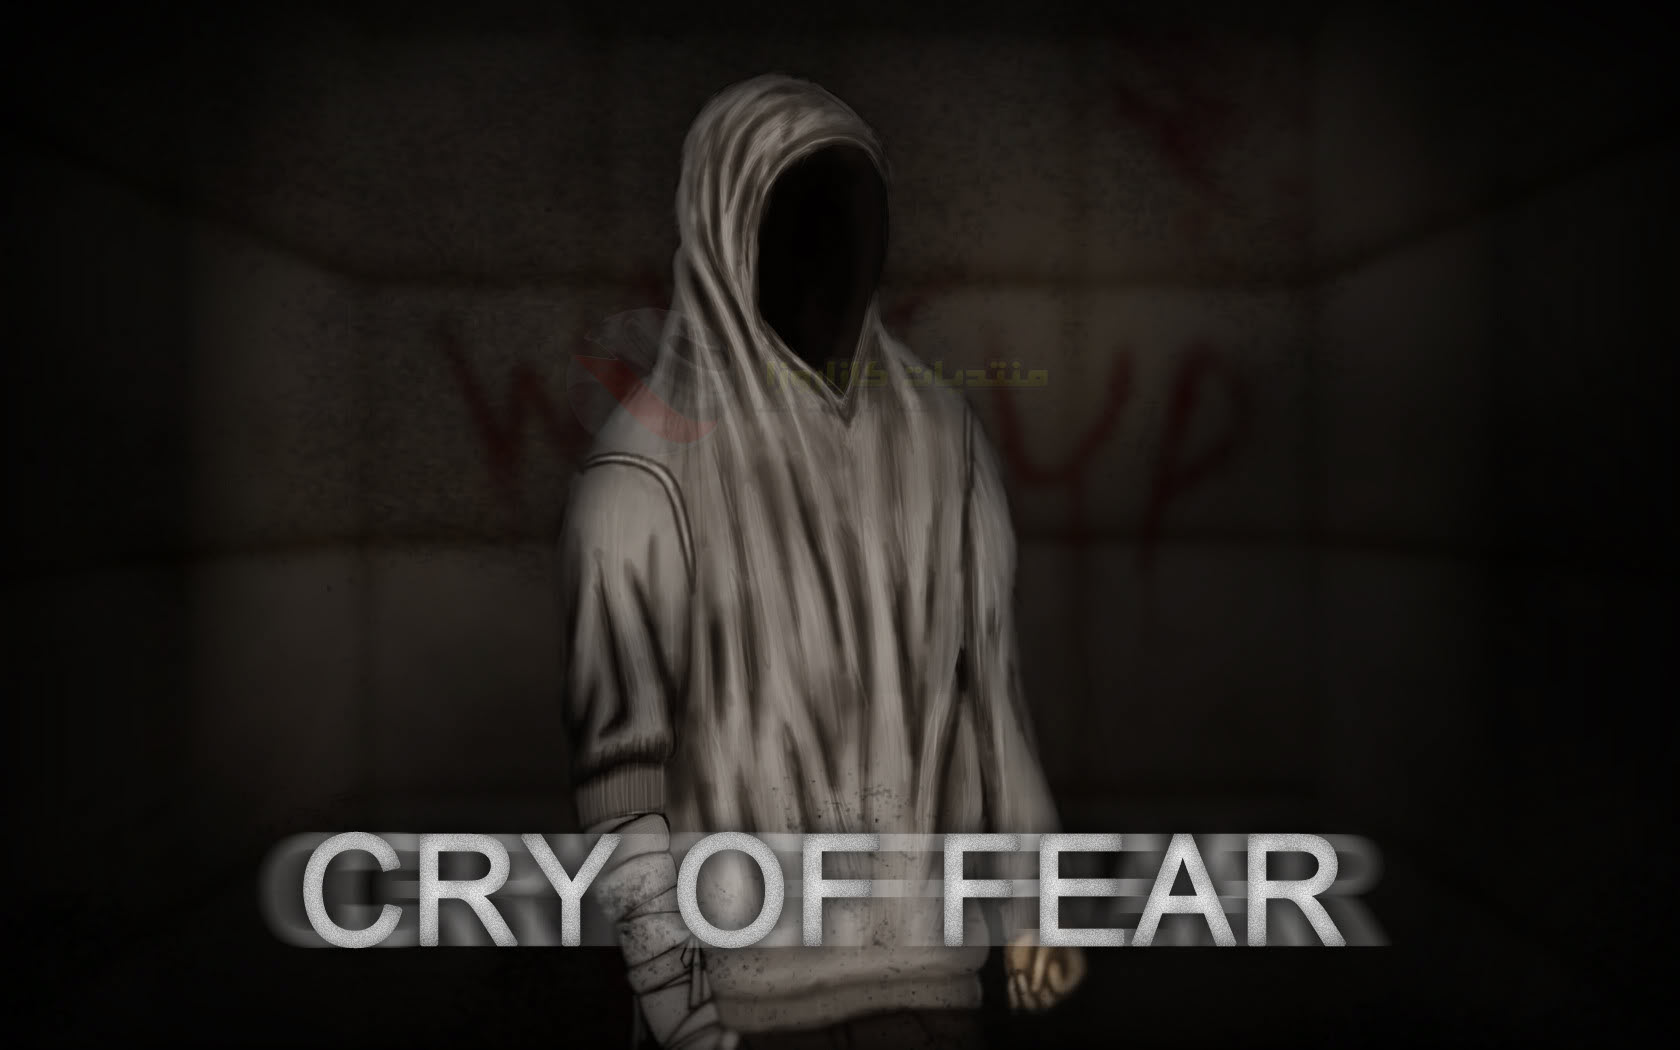 Cry of fear русификатор стим. Cry of Fear Саймон Хенрикссон.